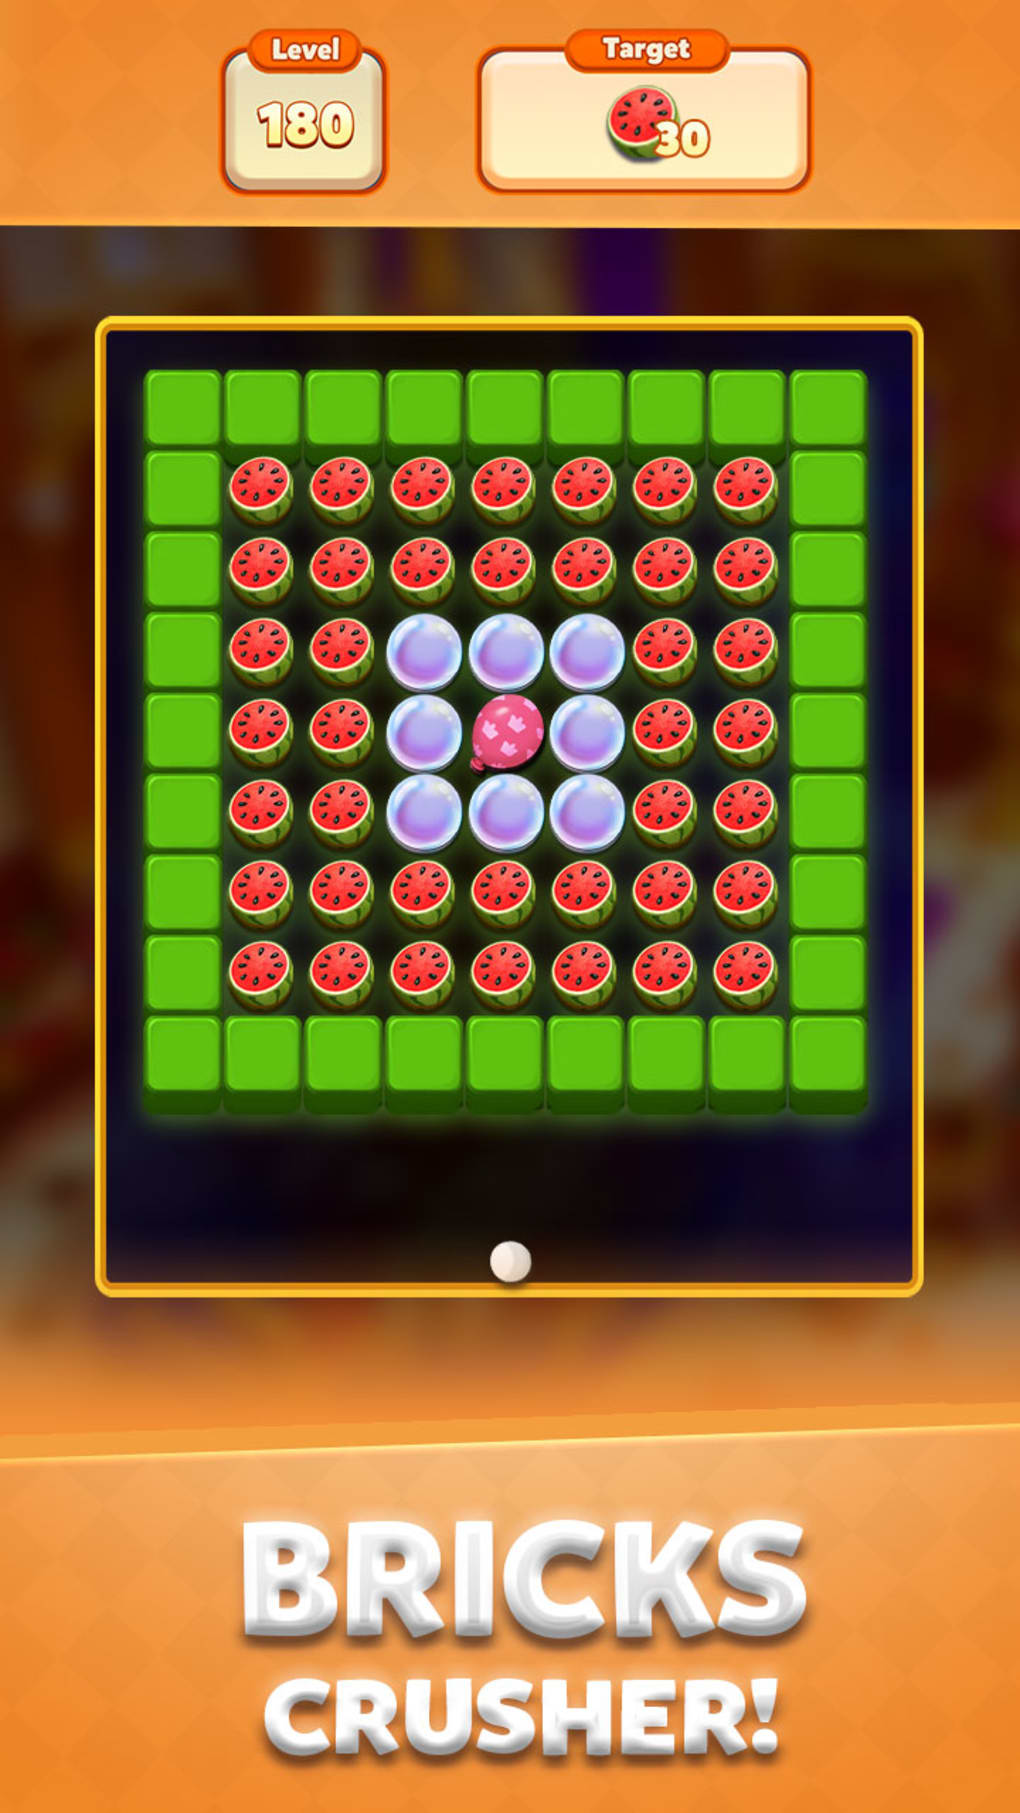 Bricks Royale-Brick Balls Game APK (Android Game) - Free Download